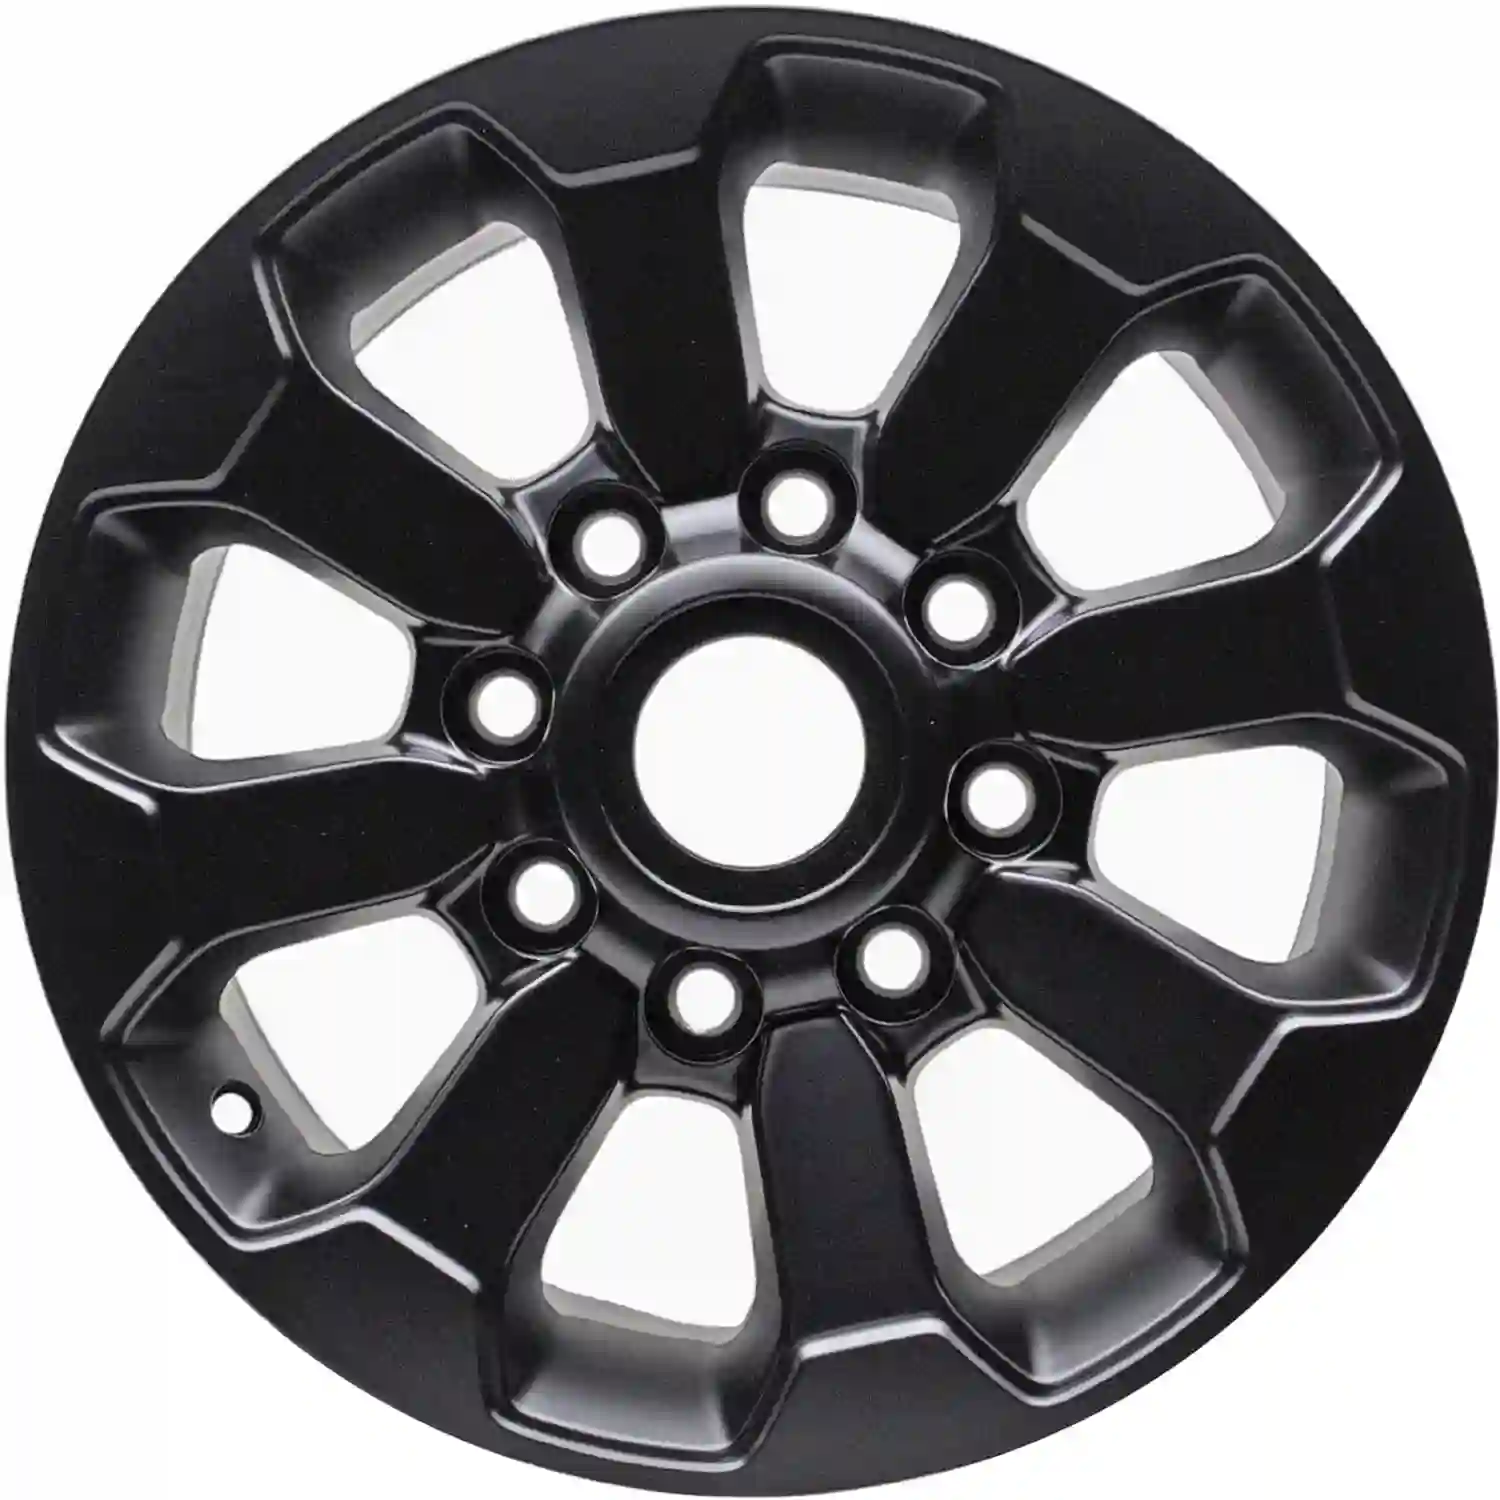 Factory Wheel Replacement New 17x8" 17 Inch Matte Black Aluminum Alloy Wheel Rim for Dodge Ram 2500 Power Wagon 2017 2018 2019 2020 2021 2022 2023